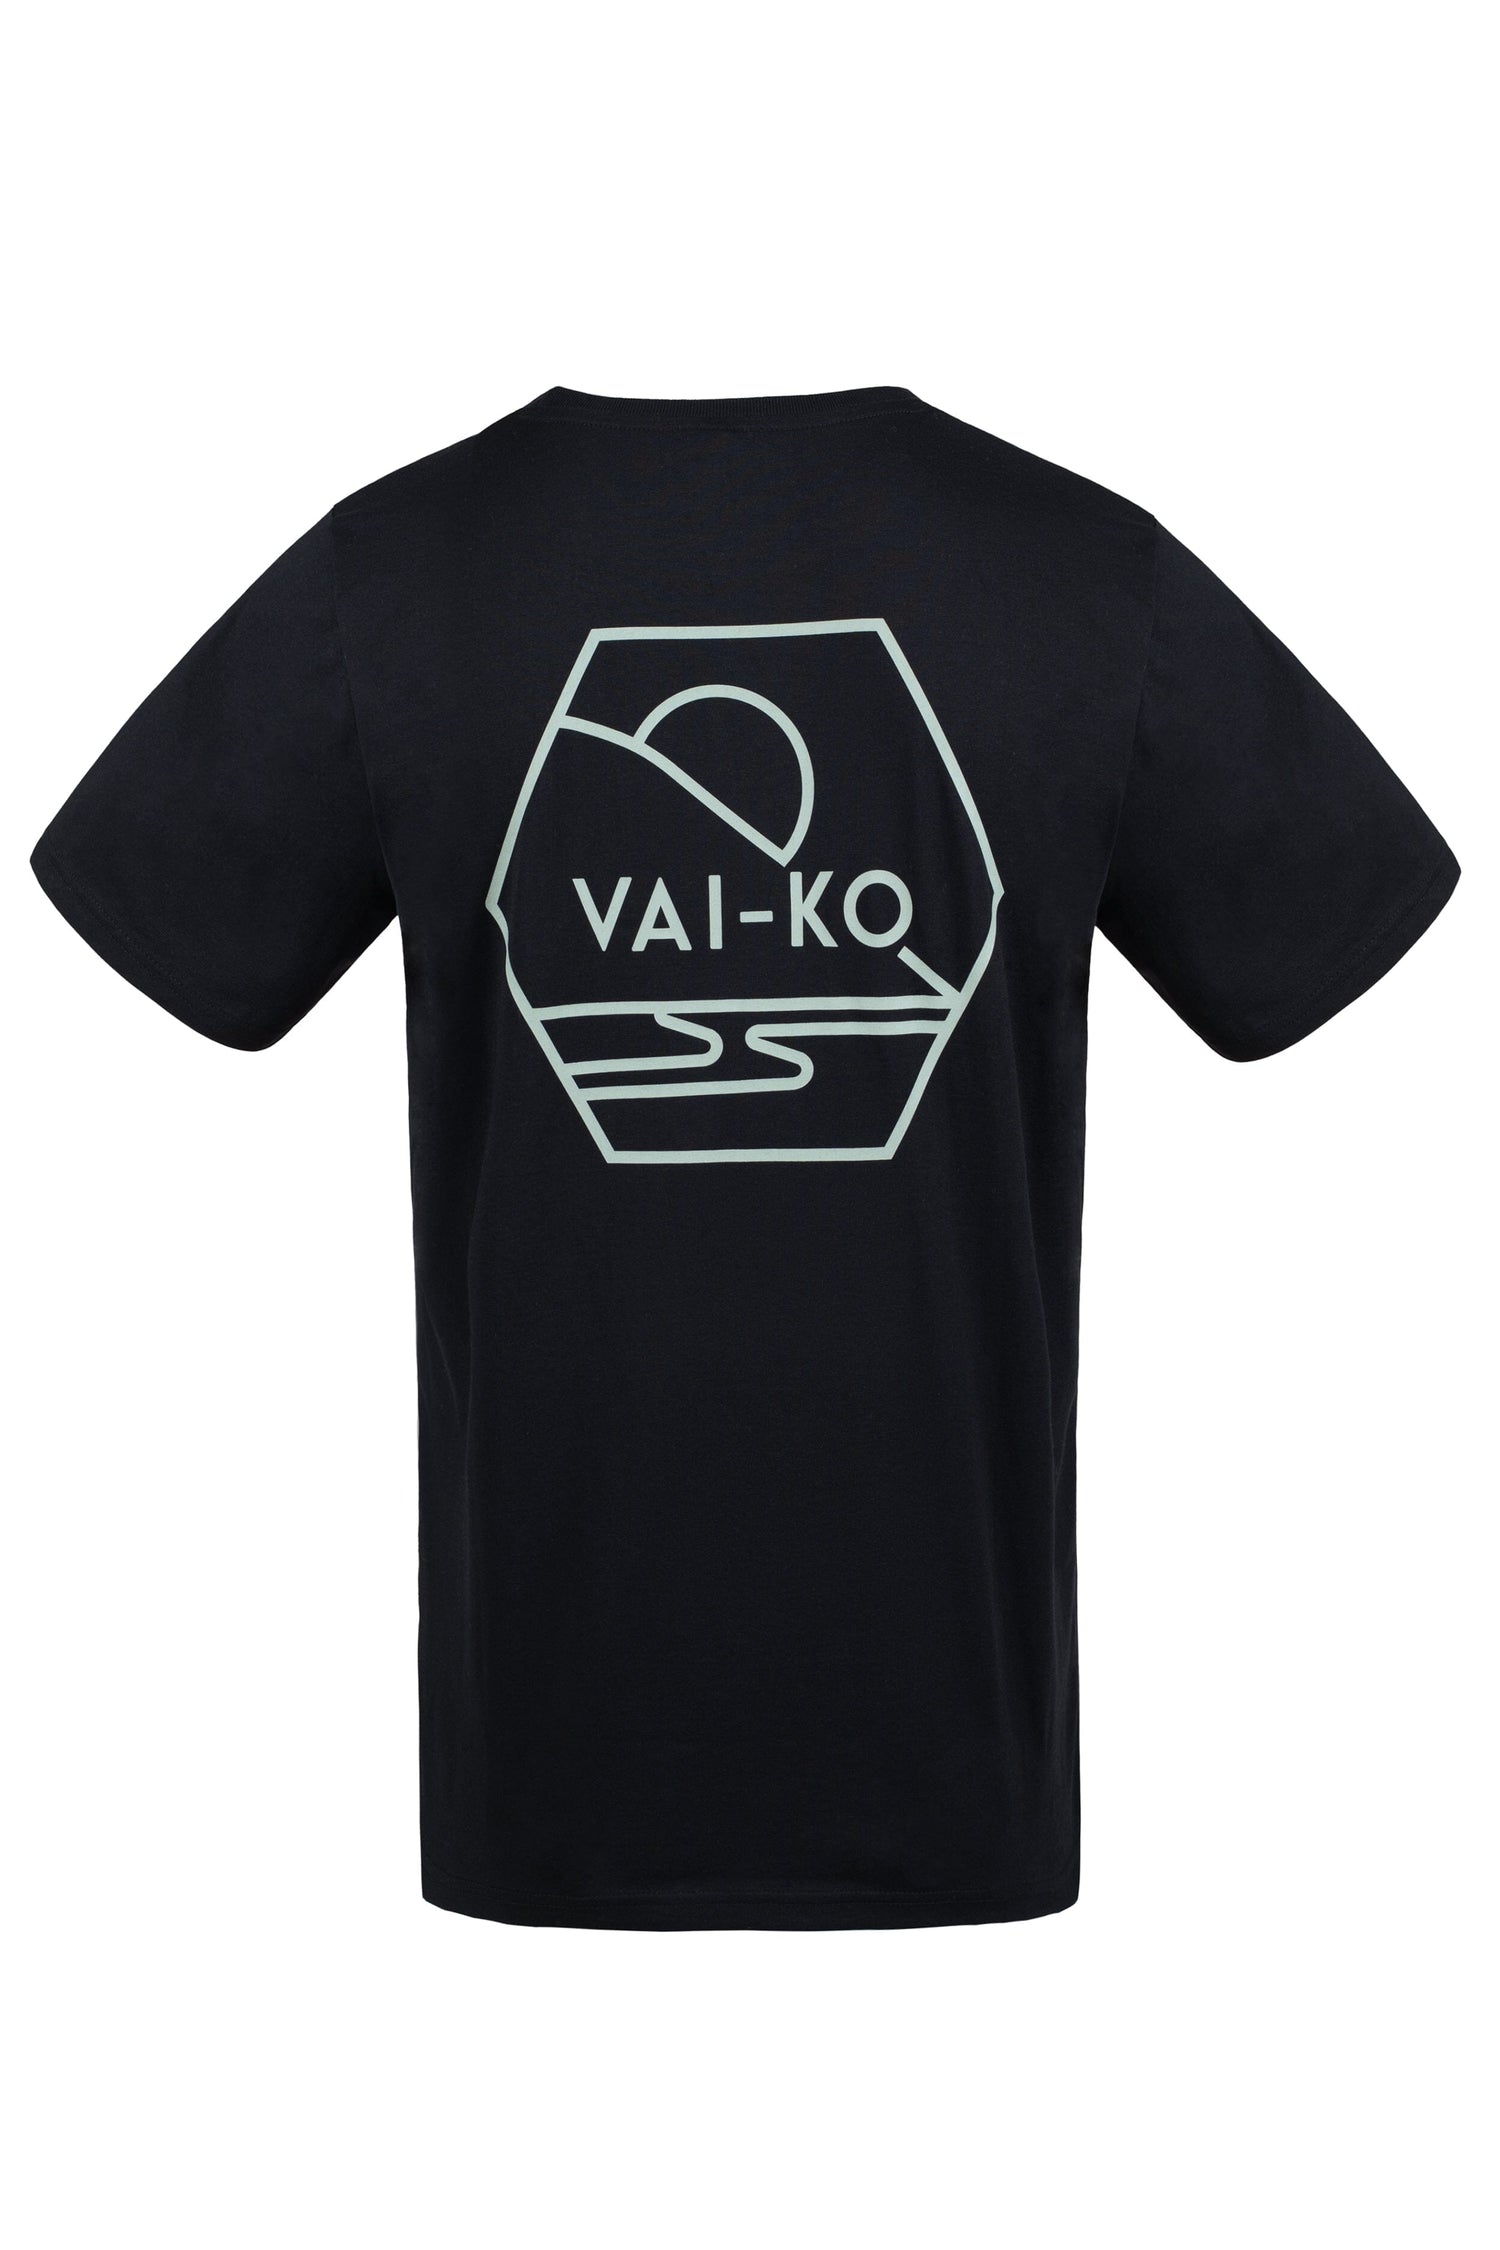 VAI-KØ M's Kultakero T-shirt - Organic cotton Shirt